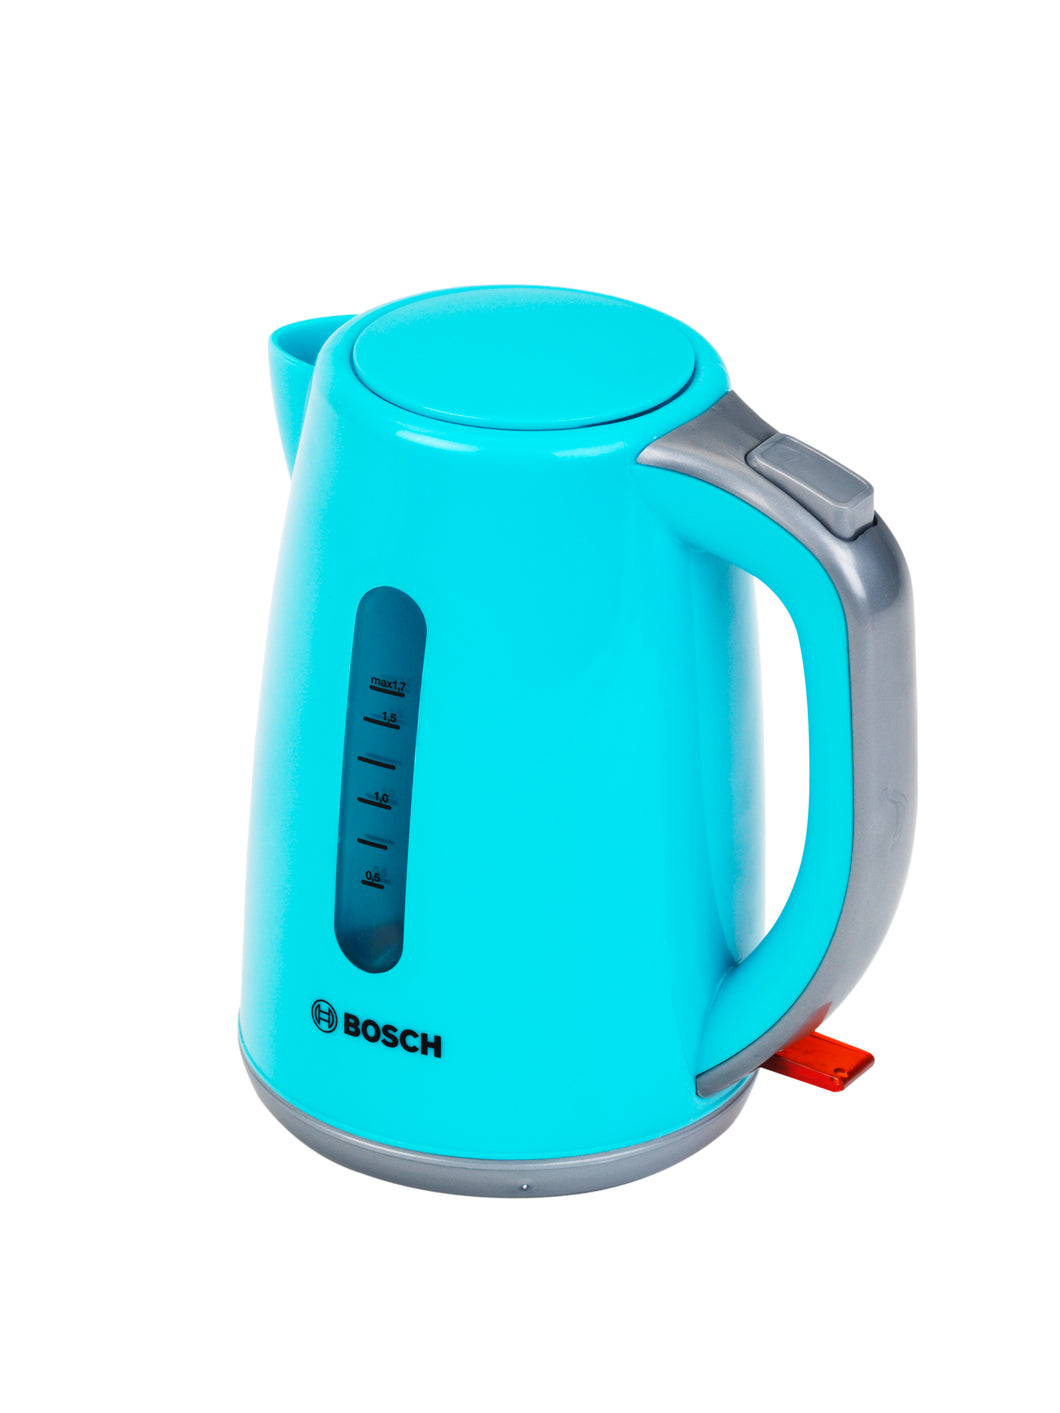 Bosch kettle